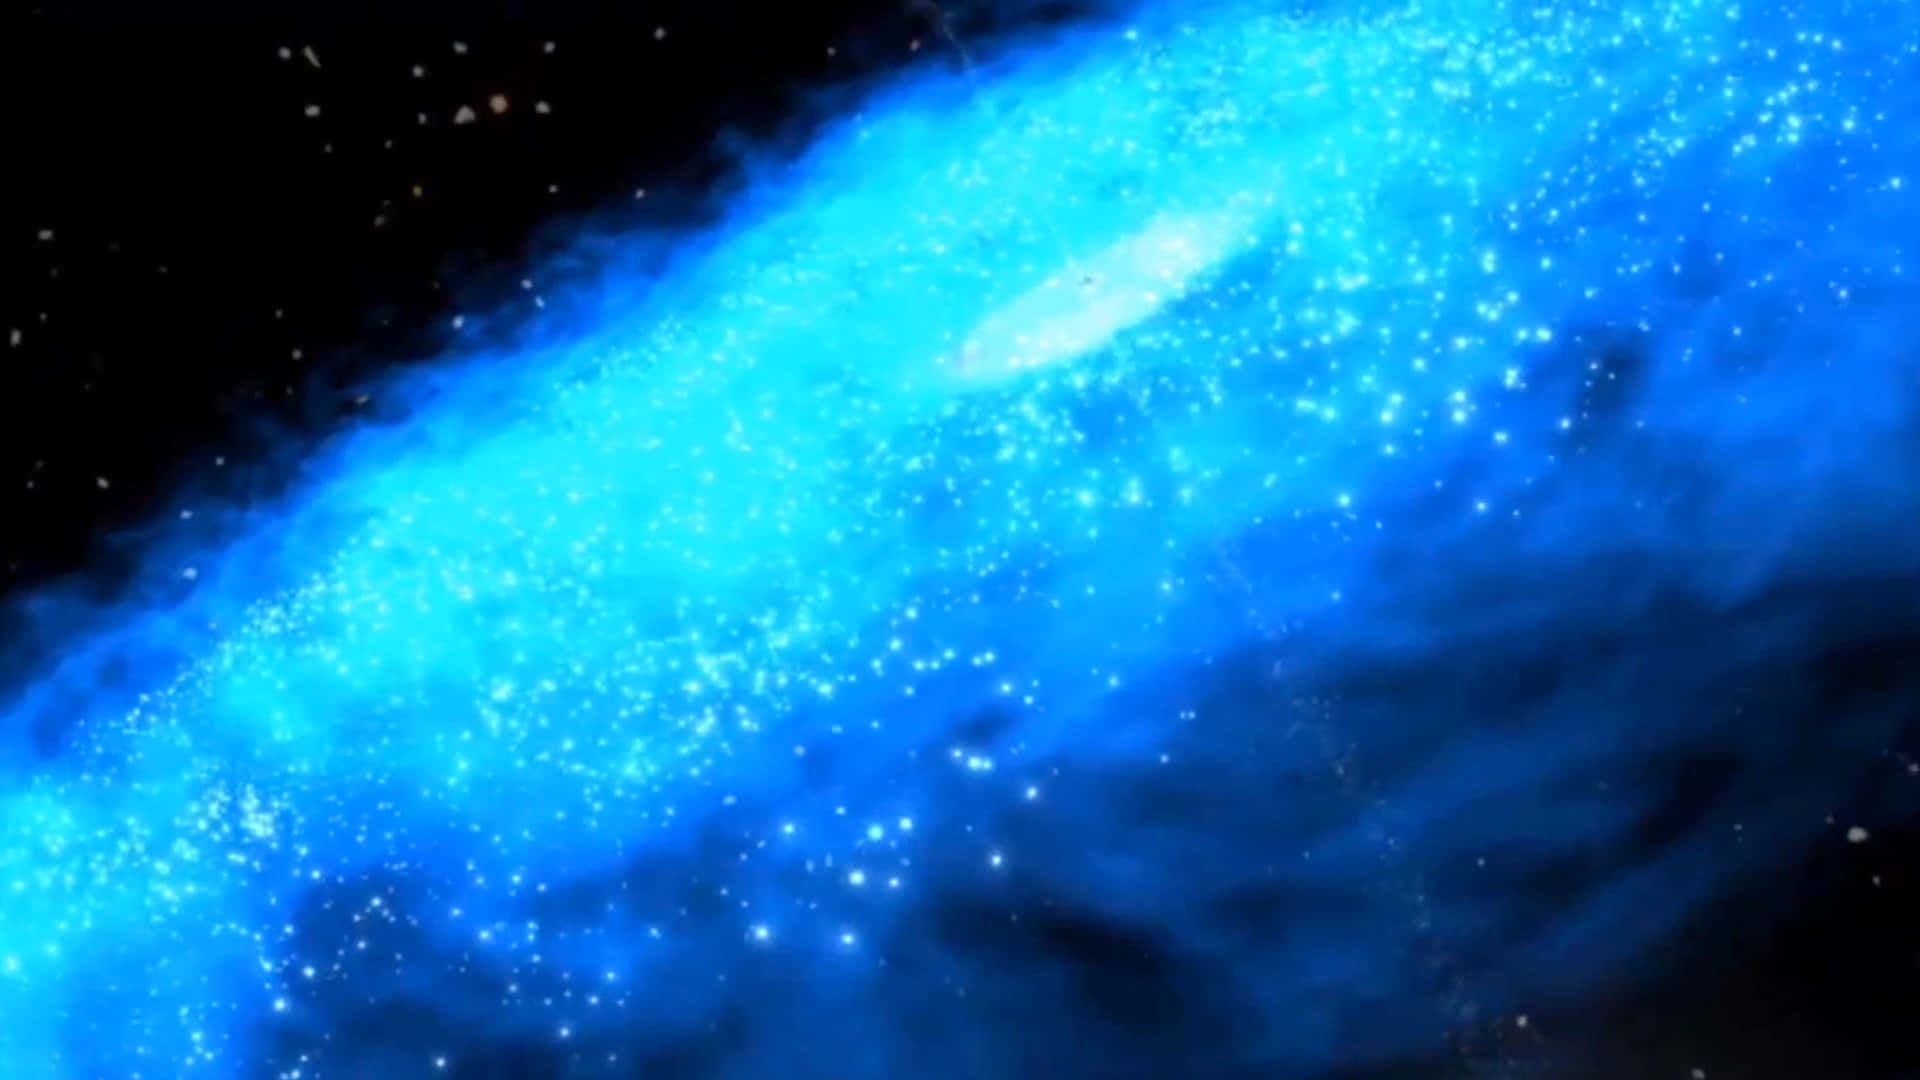 Mysterious Universe - A Surreal Representation Of Dark Matter